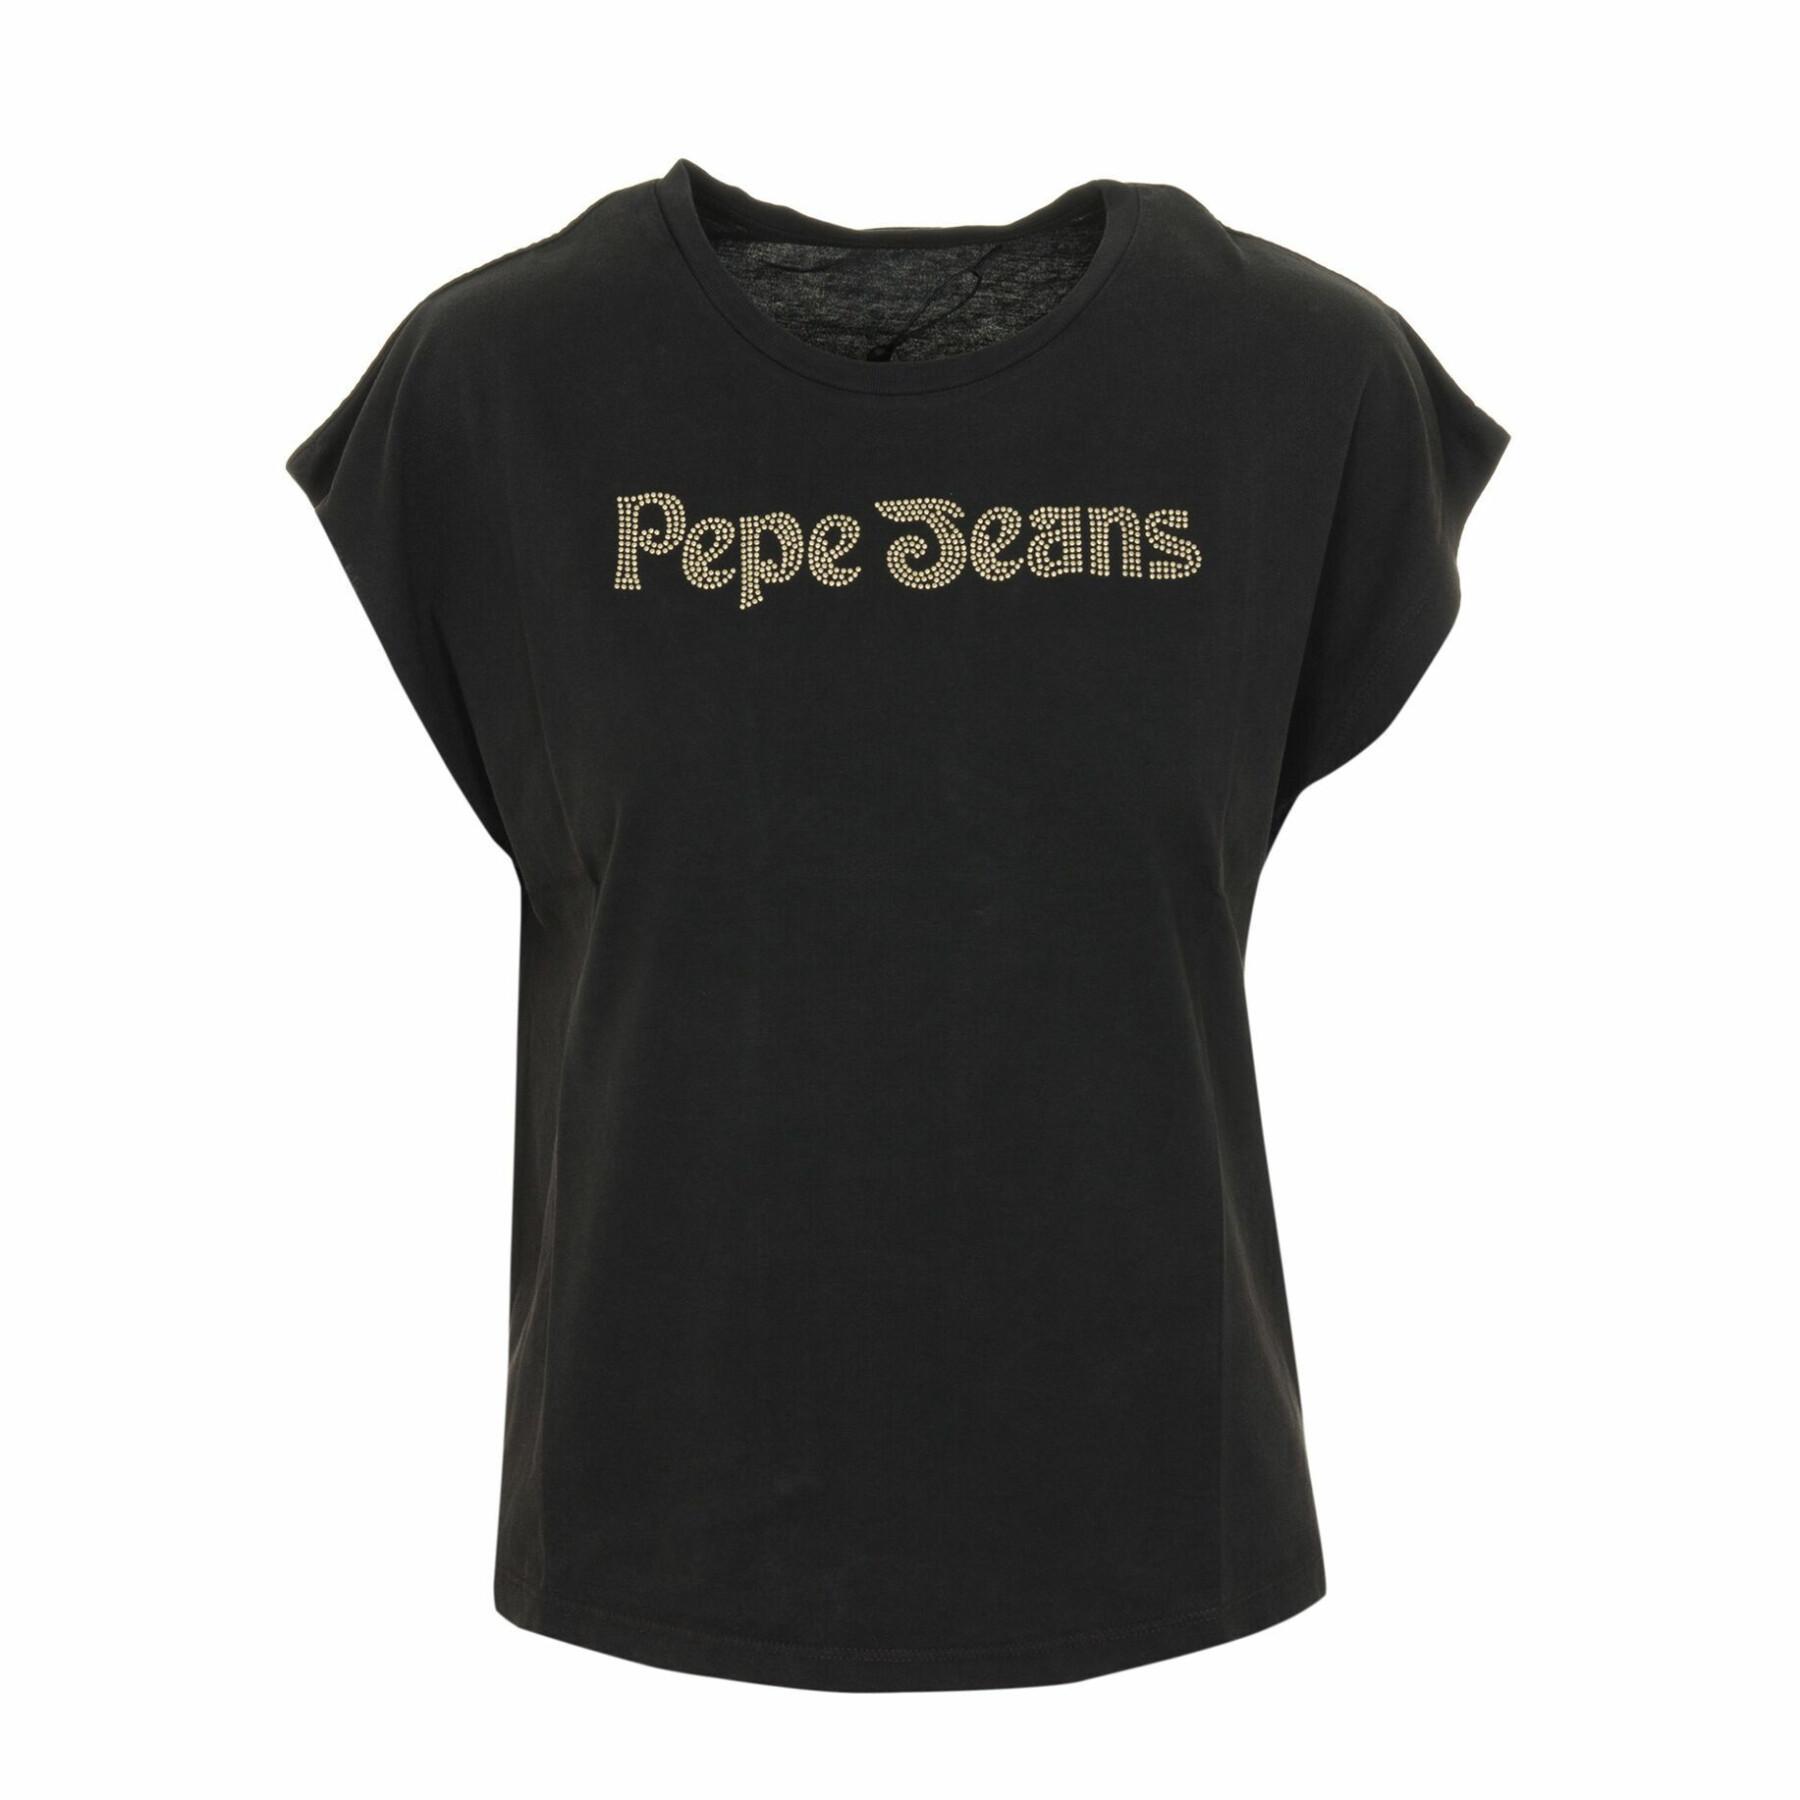 Pepe Jeans Black Regular Fit Shirt